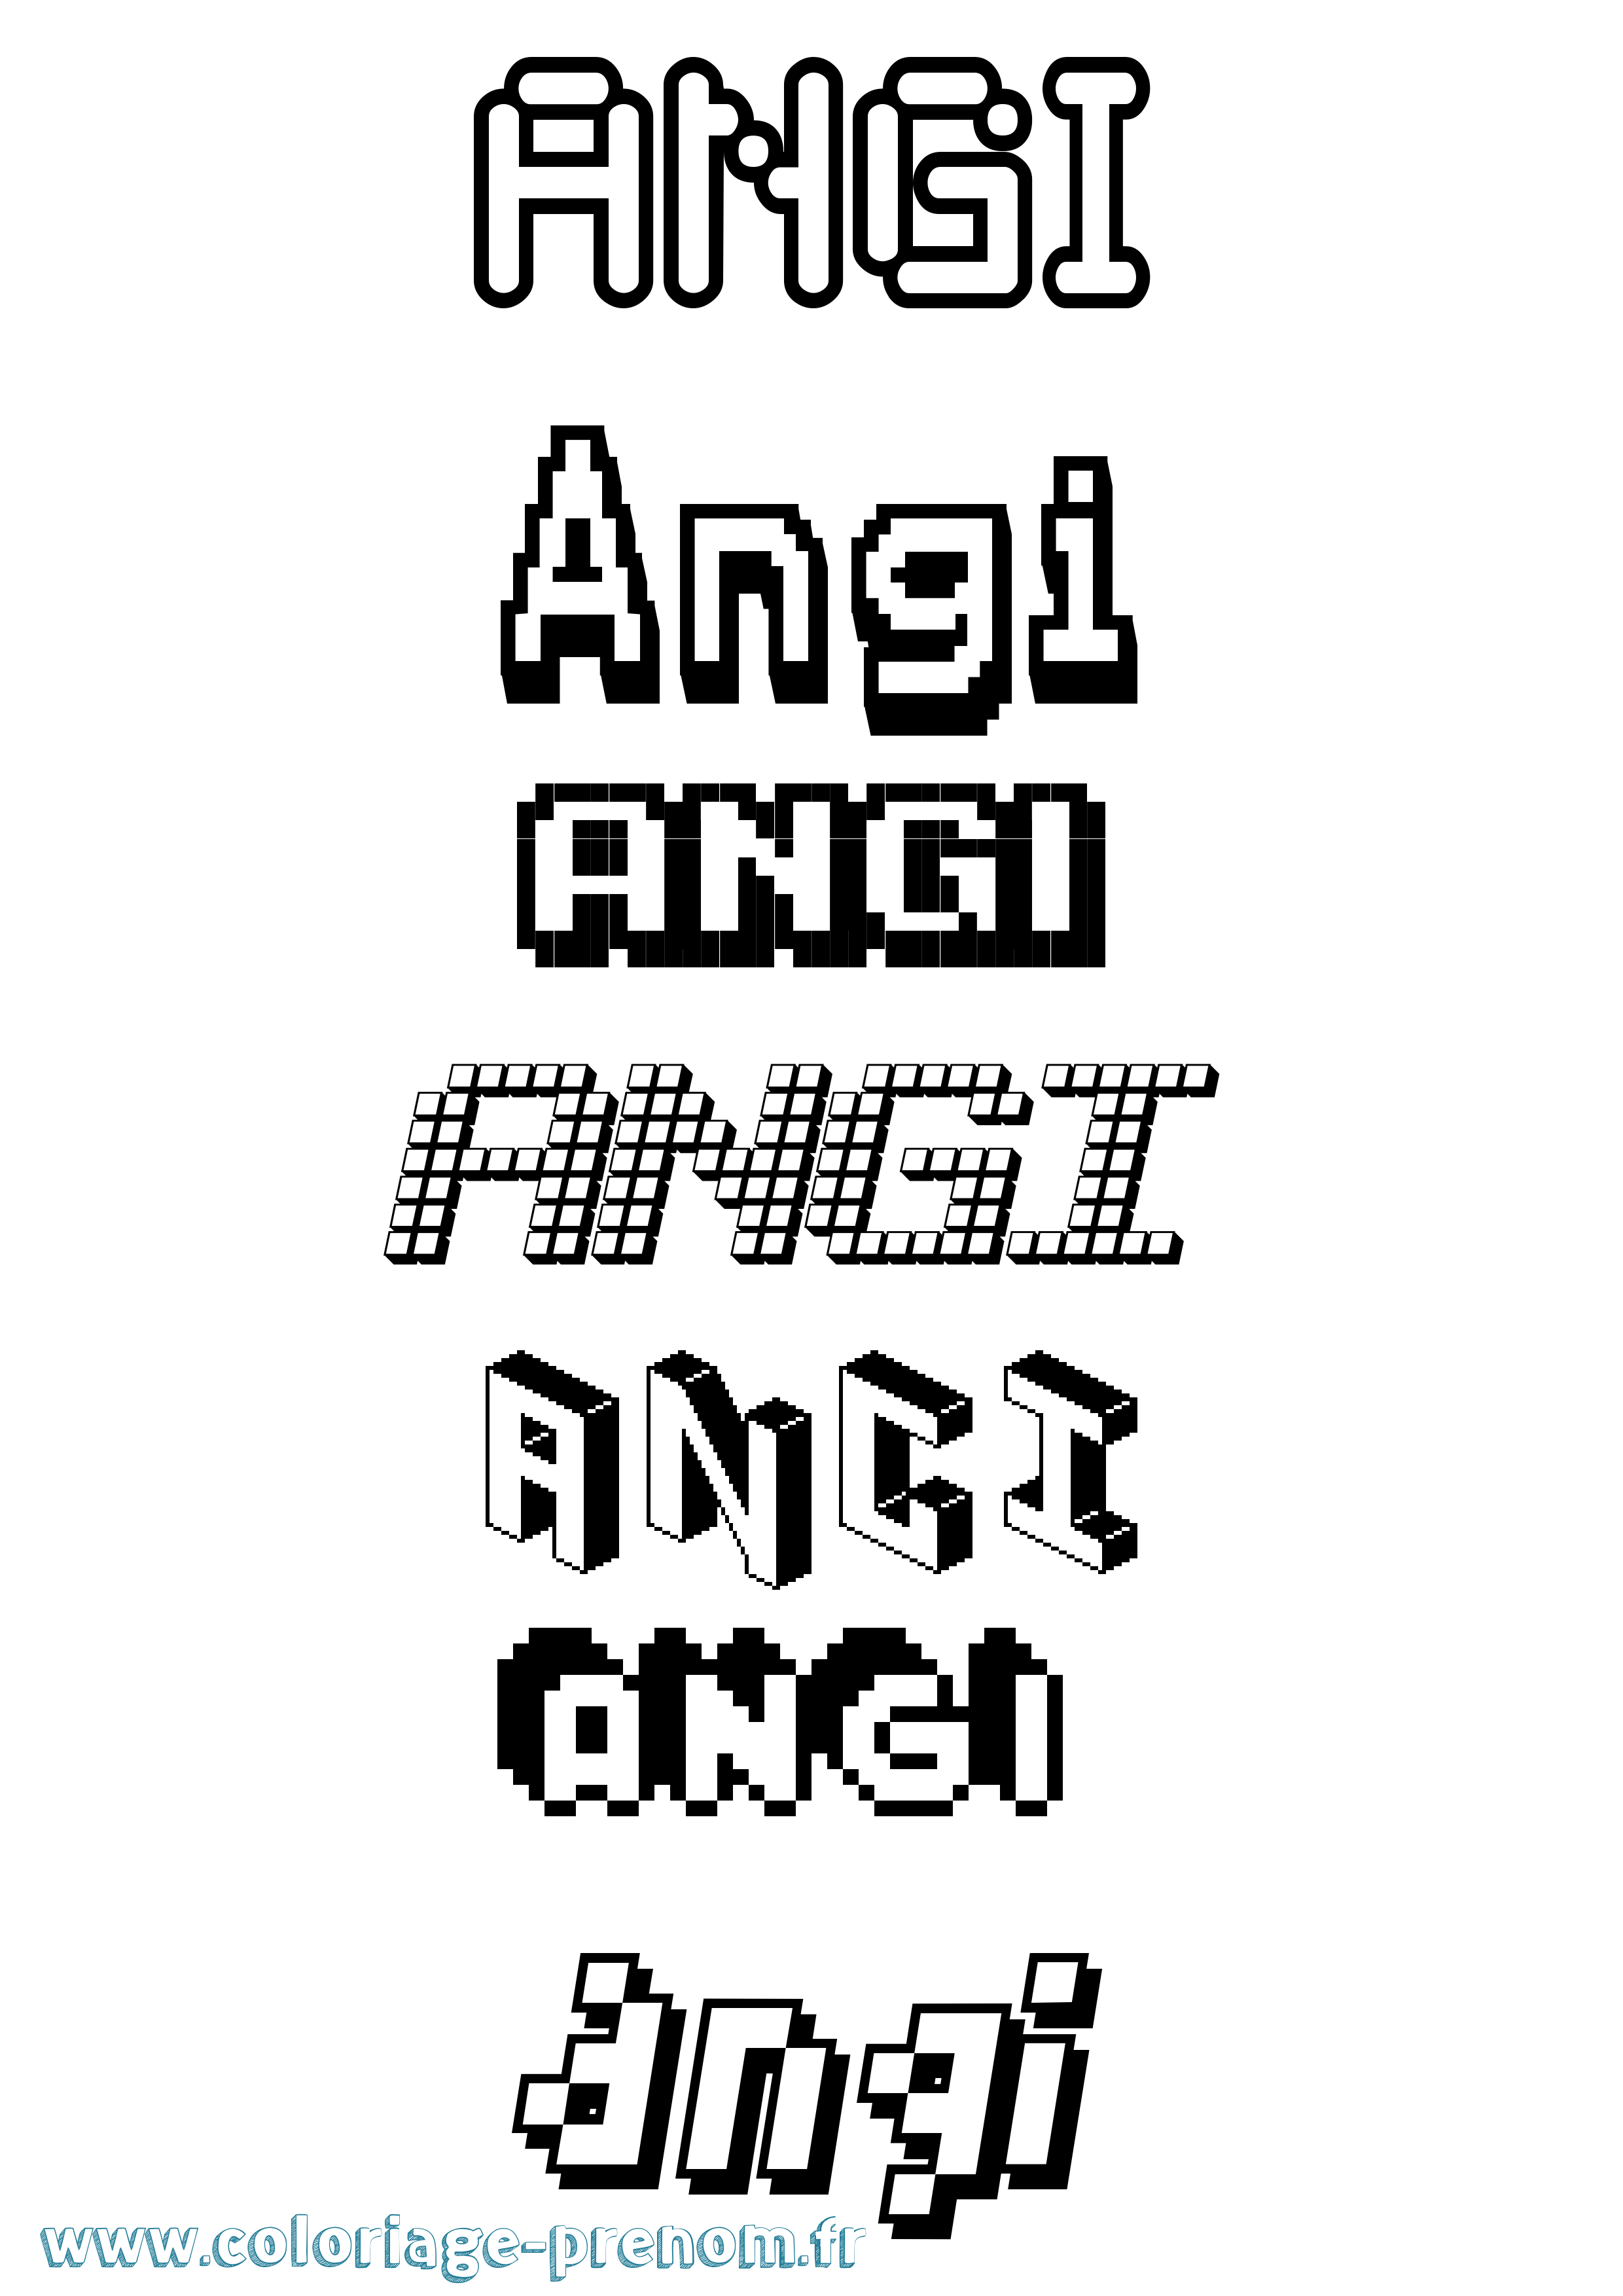 Coloriage prénom Angi Pixel